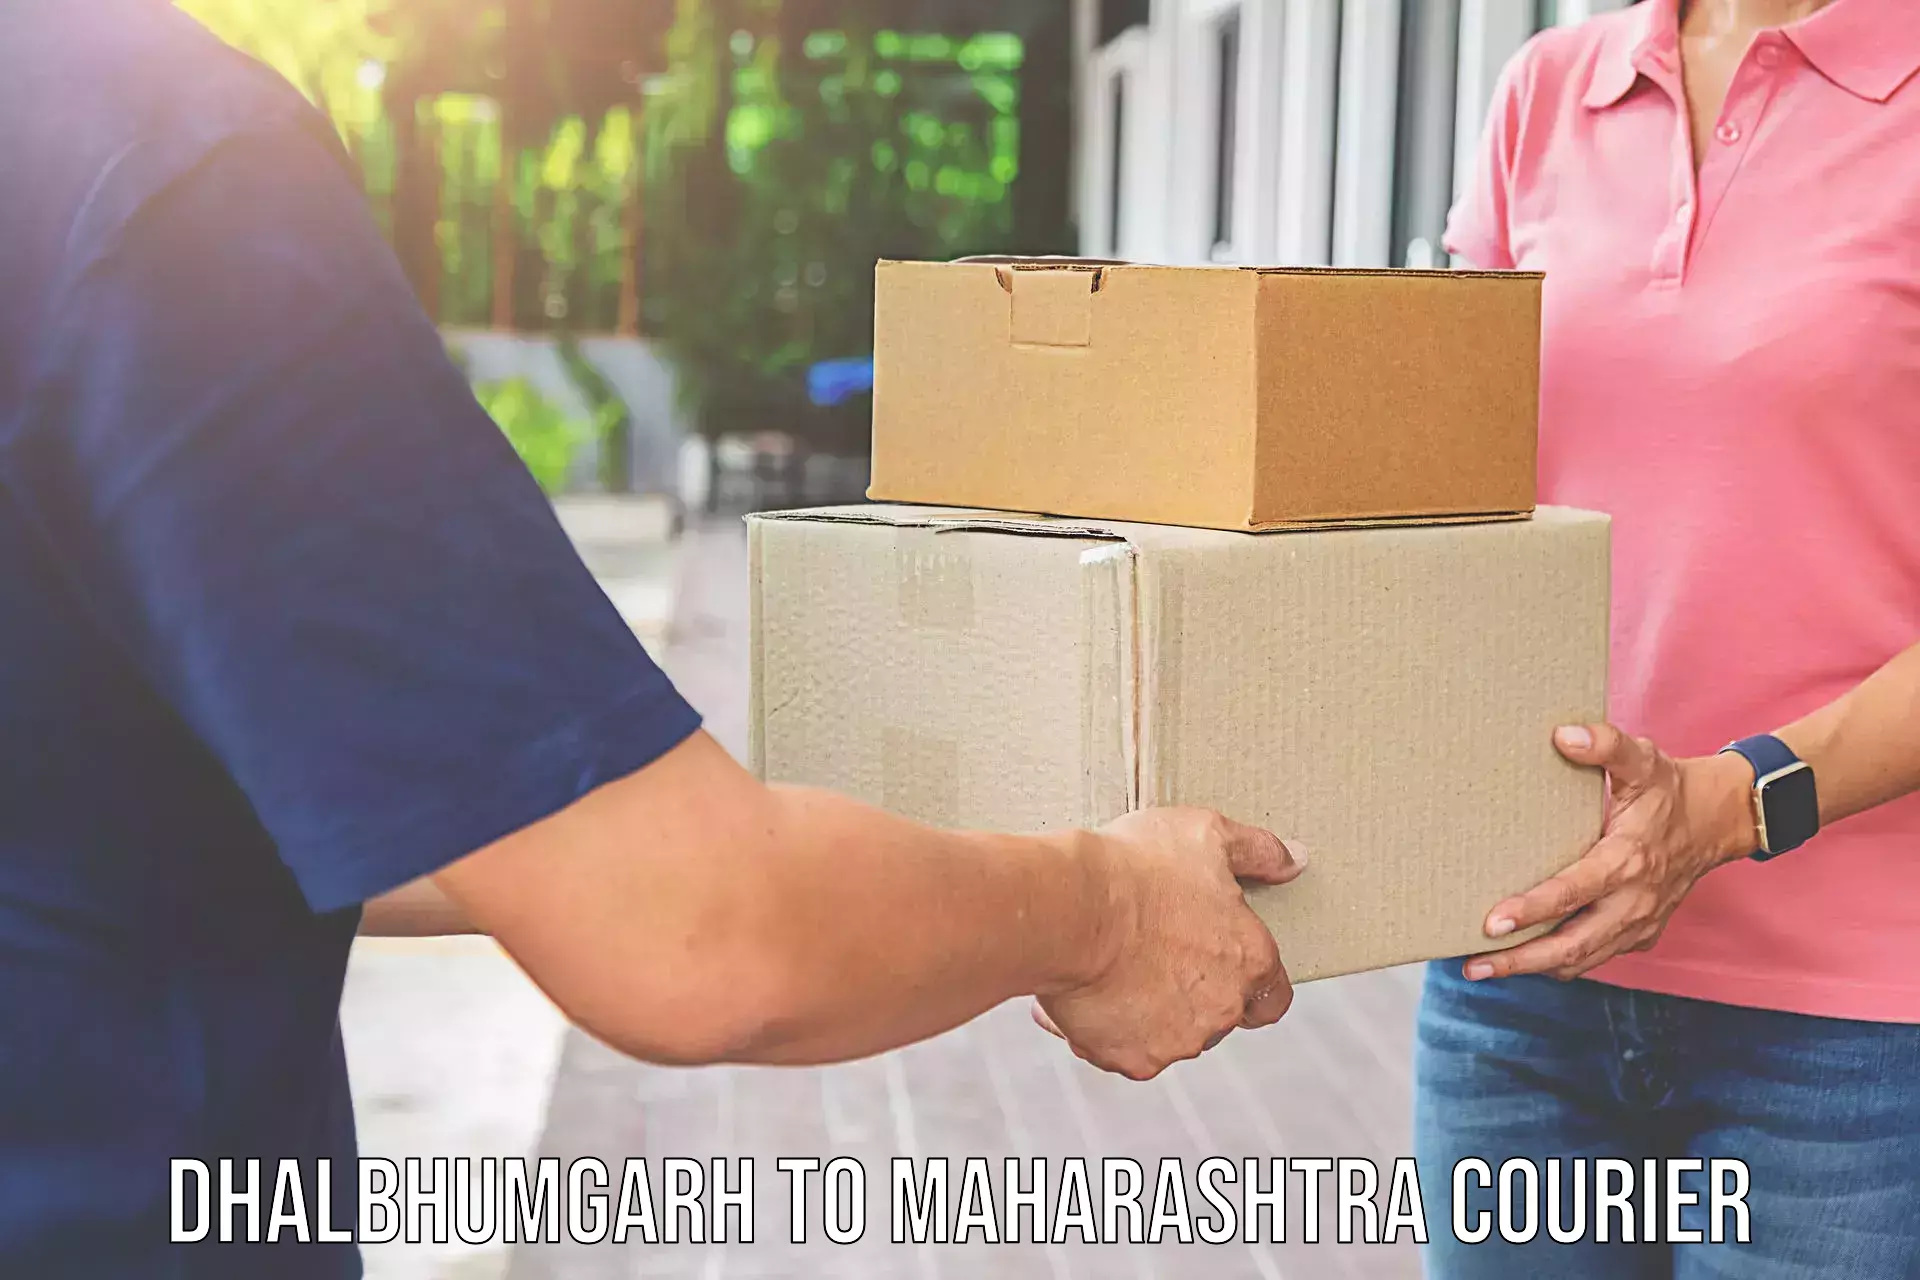 Furniture delivery service Dhalbhumgarh to Ratnagiri